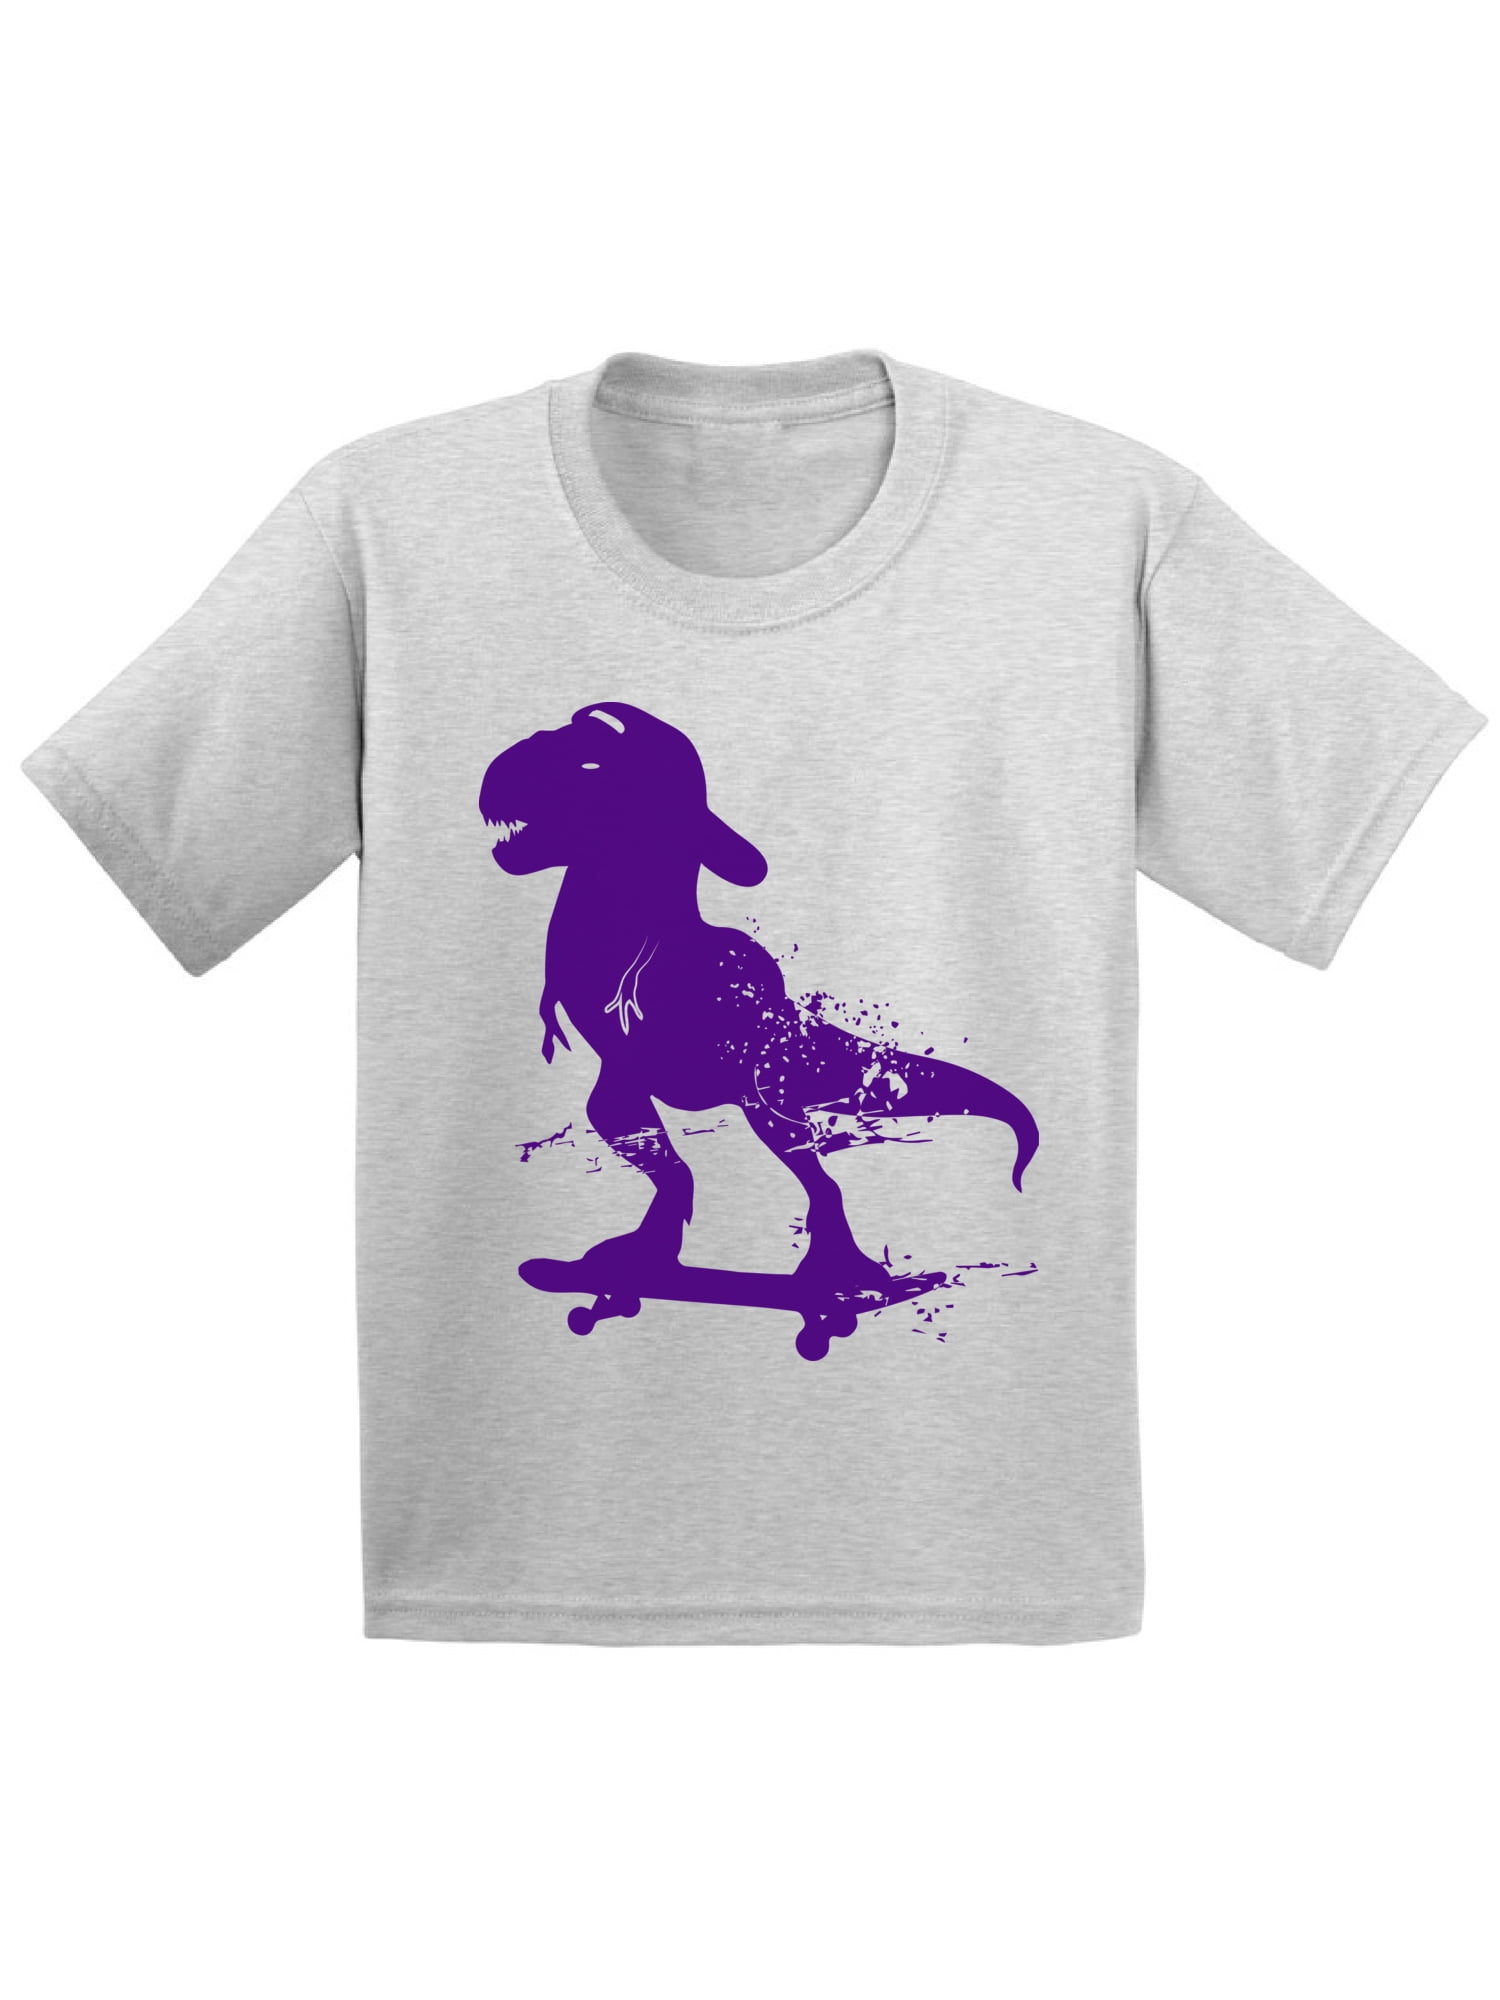 Boys dinosaur skateboard short and shirt set tan customization available see details